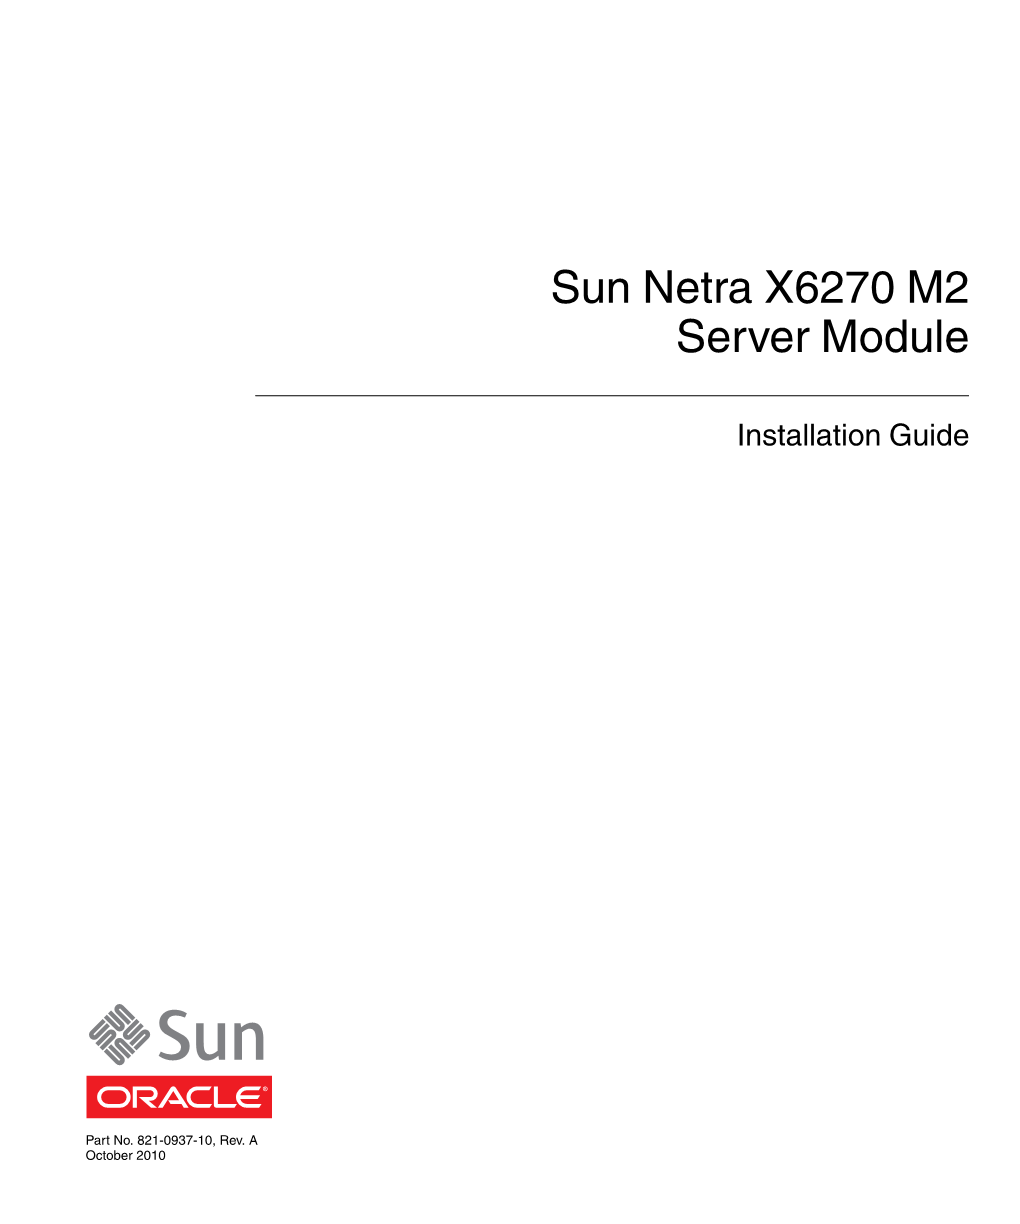 Sun Netra X6270 M2 Server Module Installation Guide • October 2010 Reinstalling the Oracle Solaris Operating System 40 Download the Oracle Solaris Operating System 40